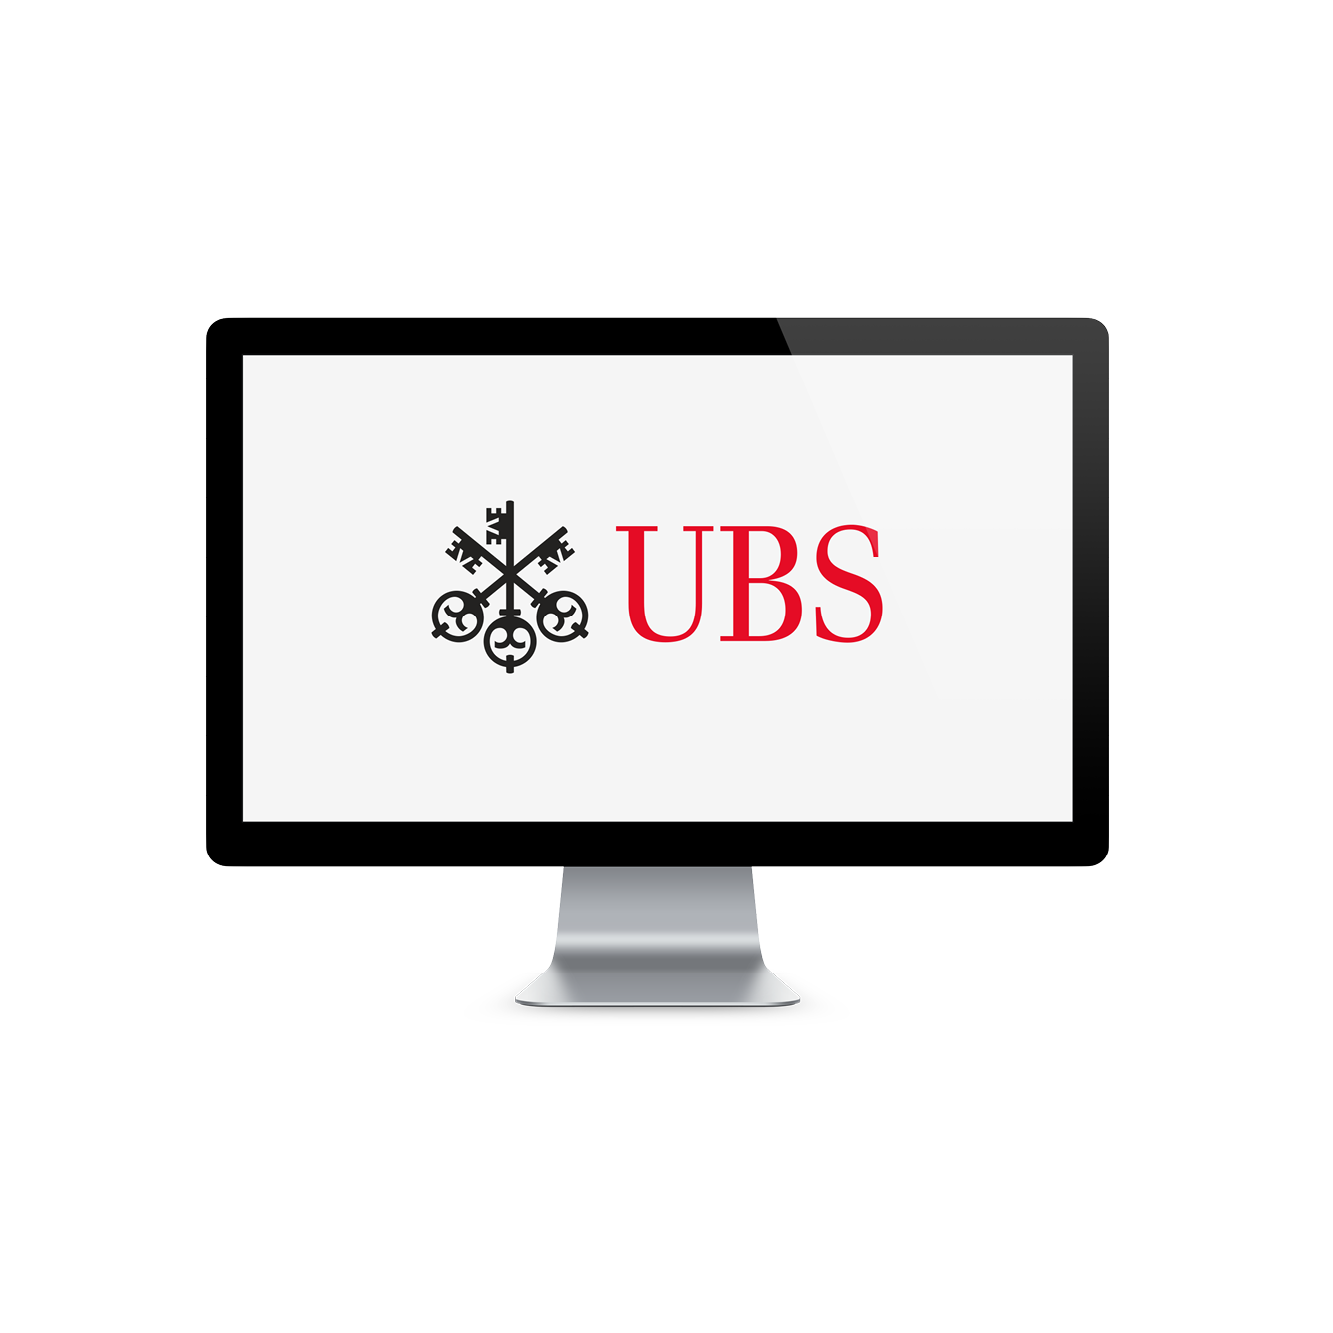 ubs logo png